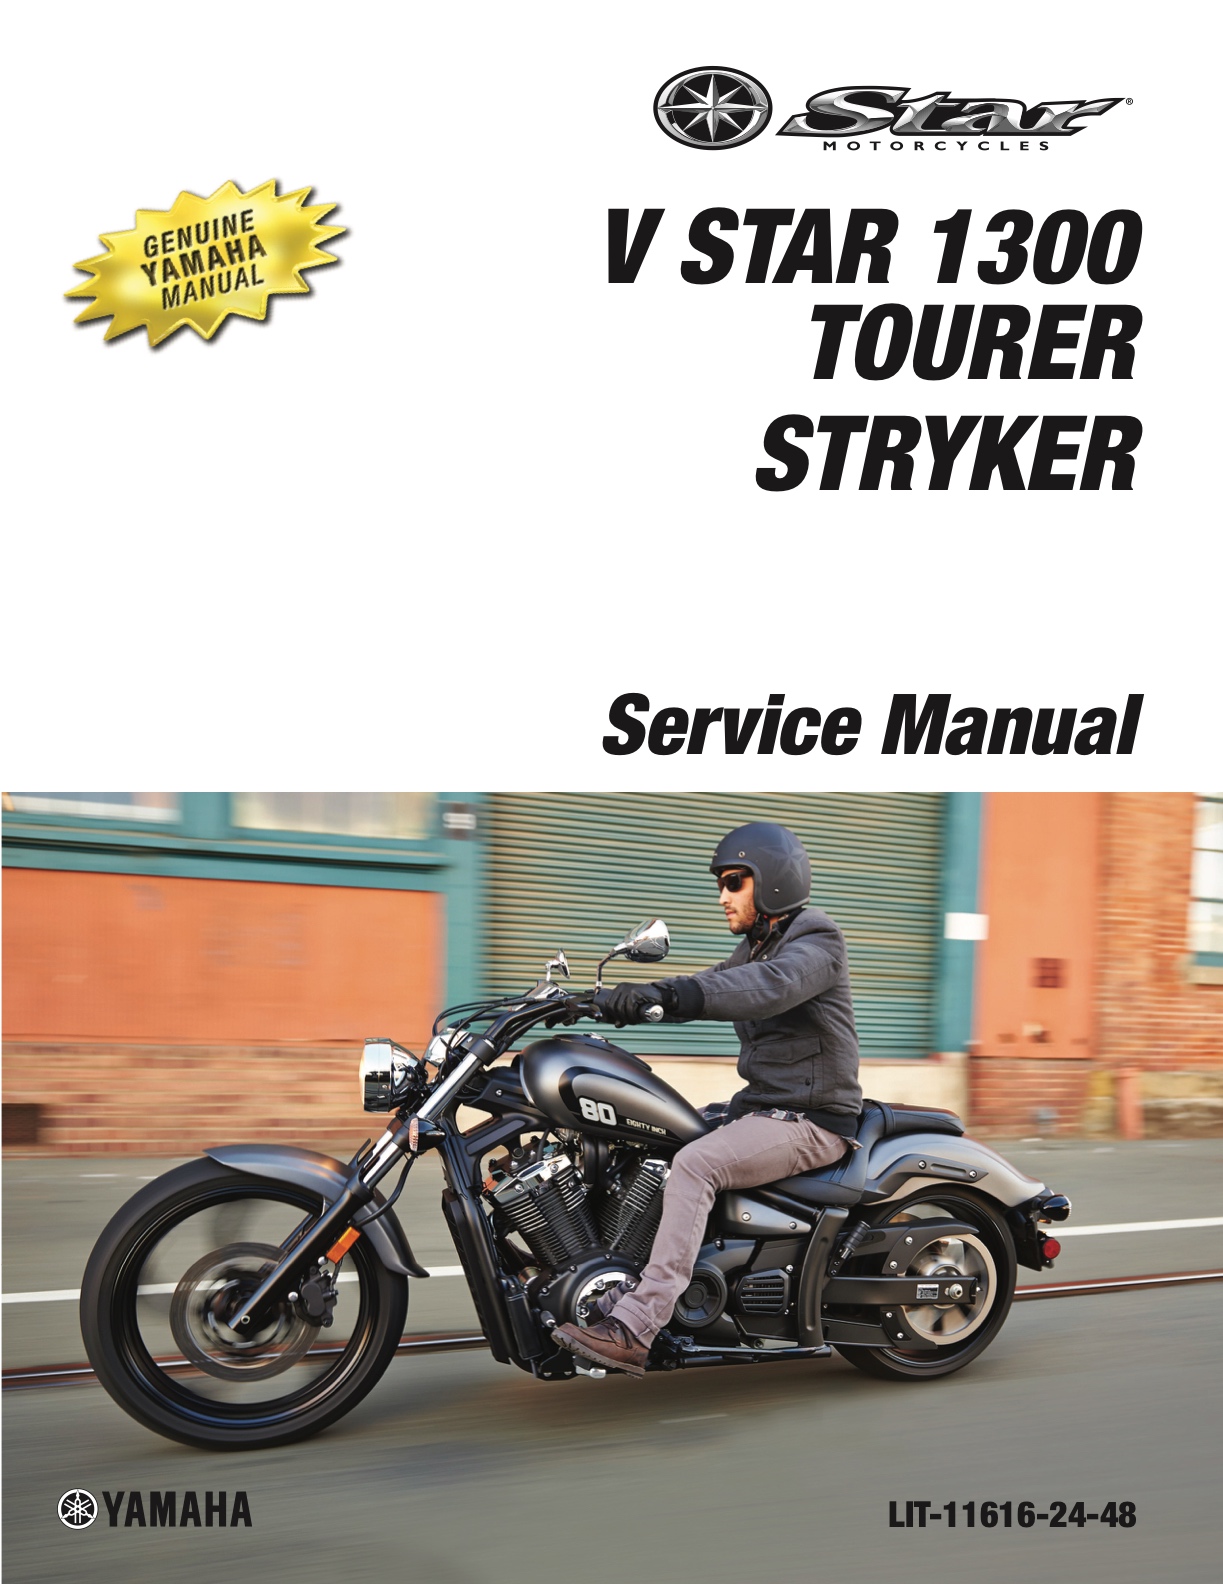 2009 V Star 1300 Manual